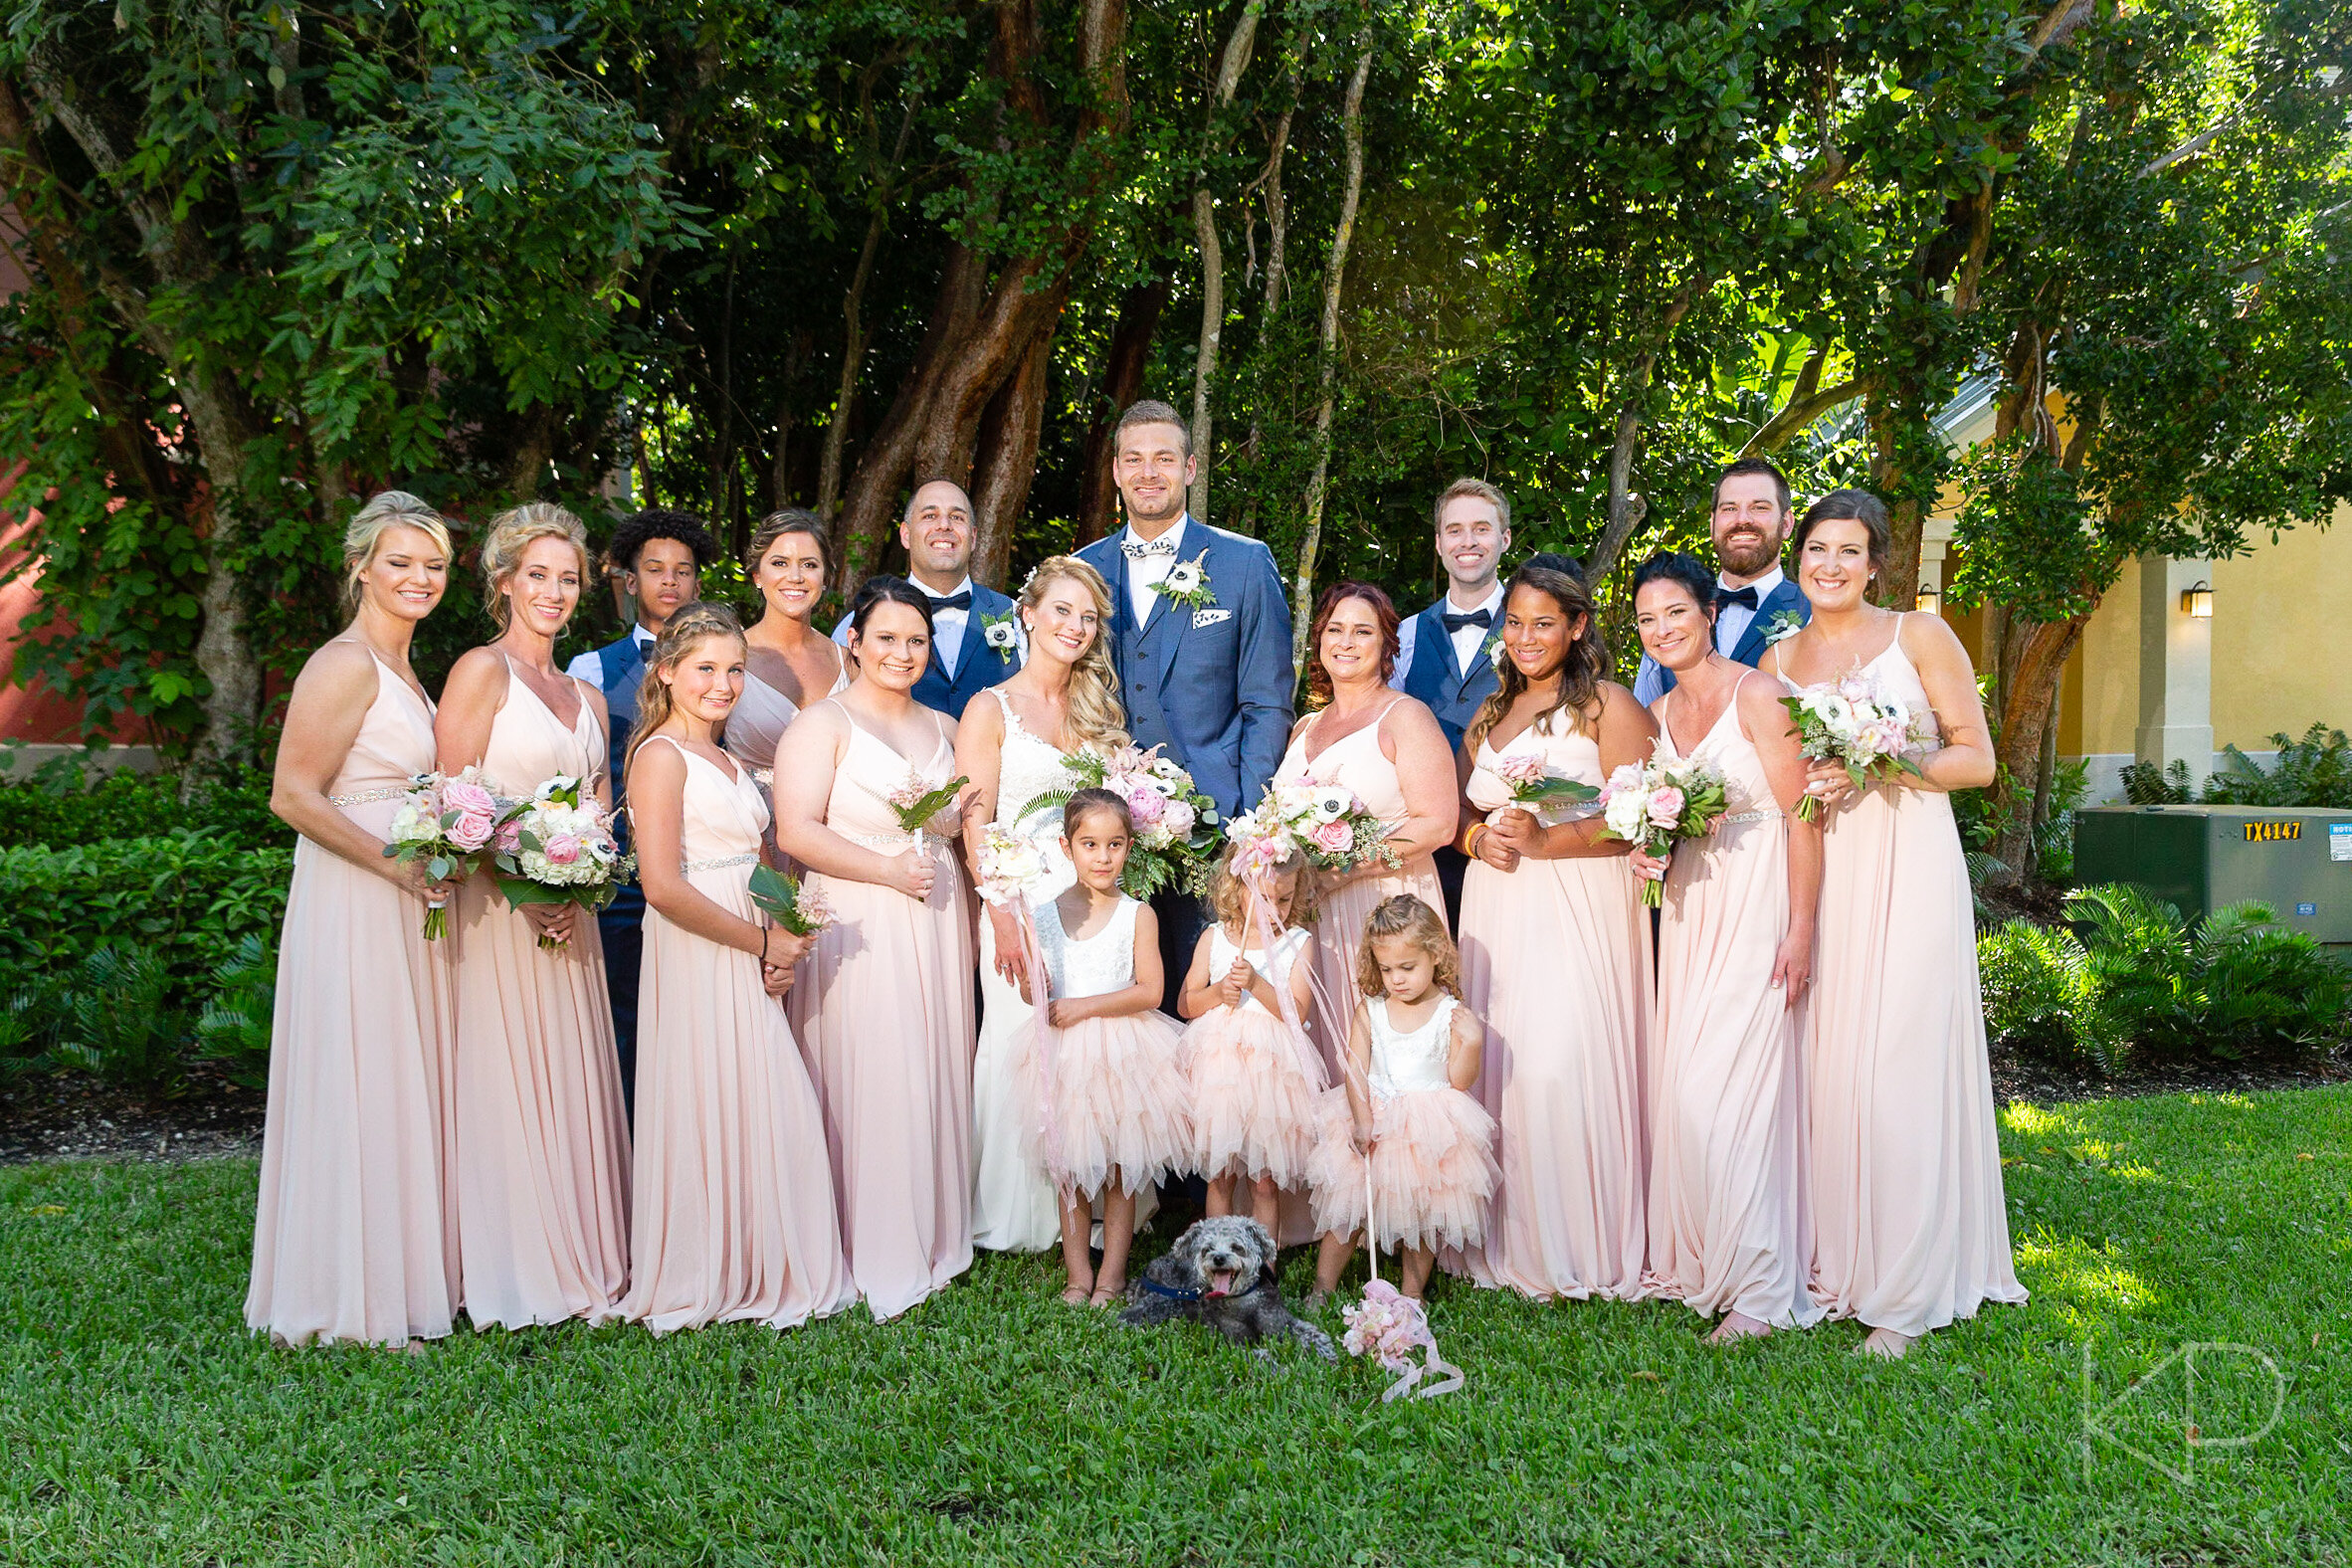  Key Largo wedding at Playa Largo resort photographed by Karrie Porter 